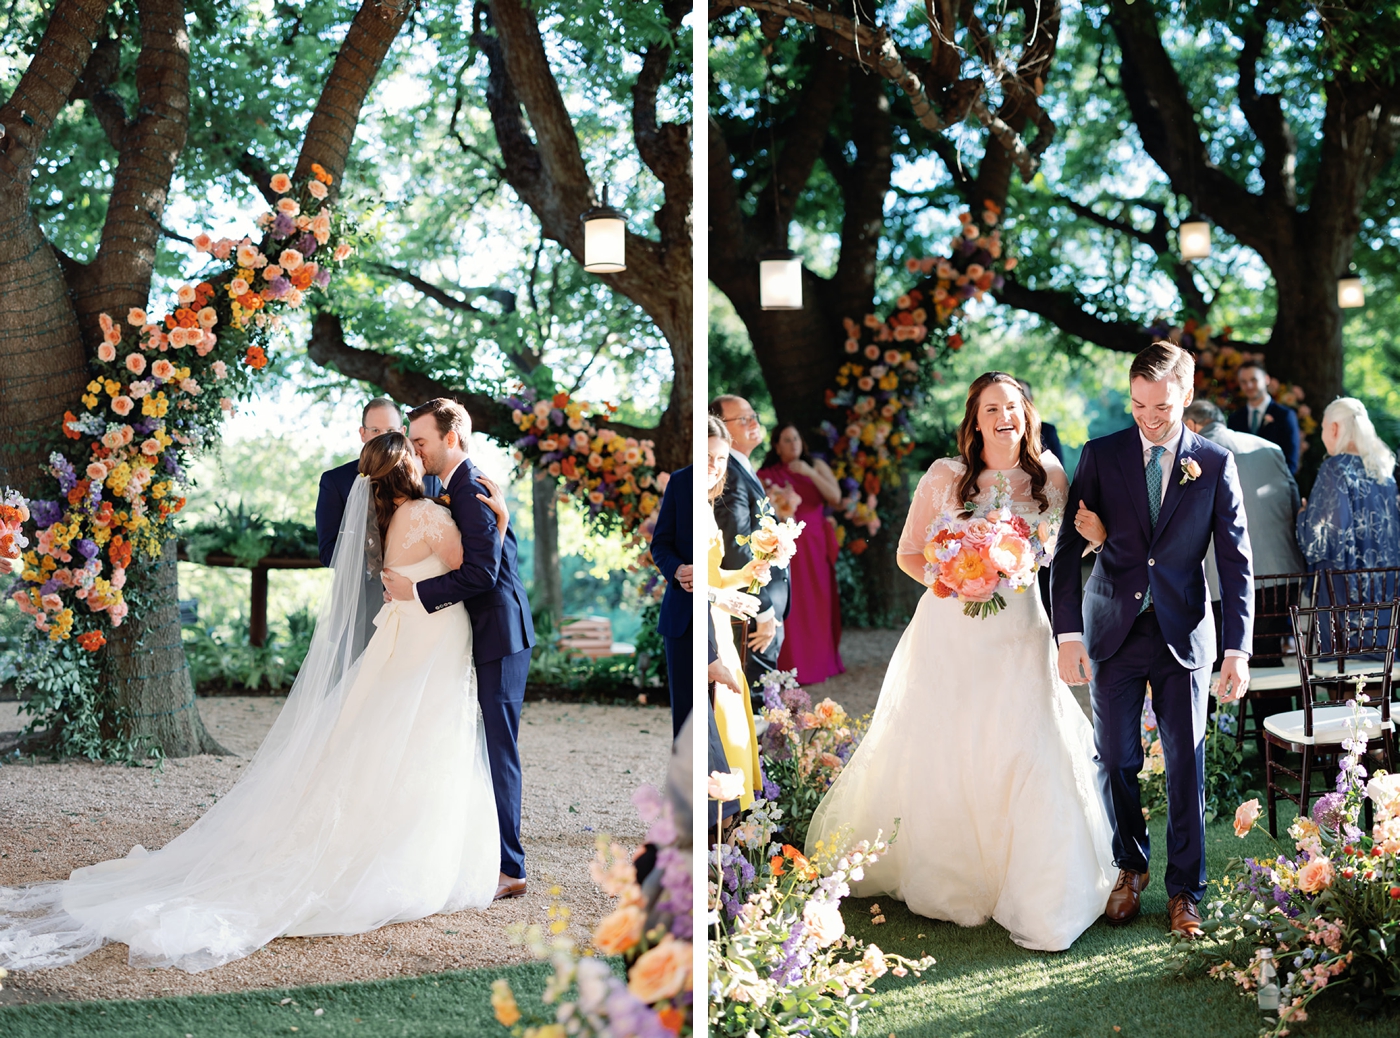 Outdoor wedding ceremony at Four Seasons Austin